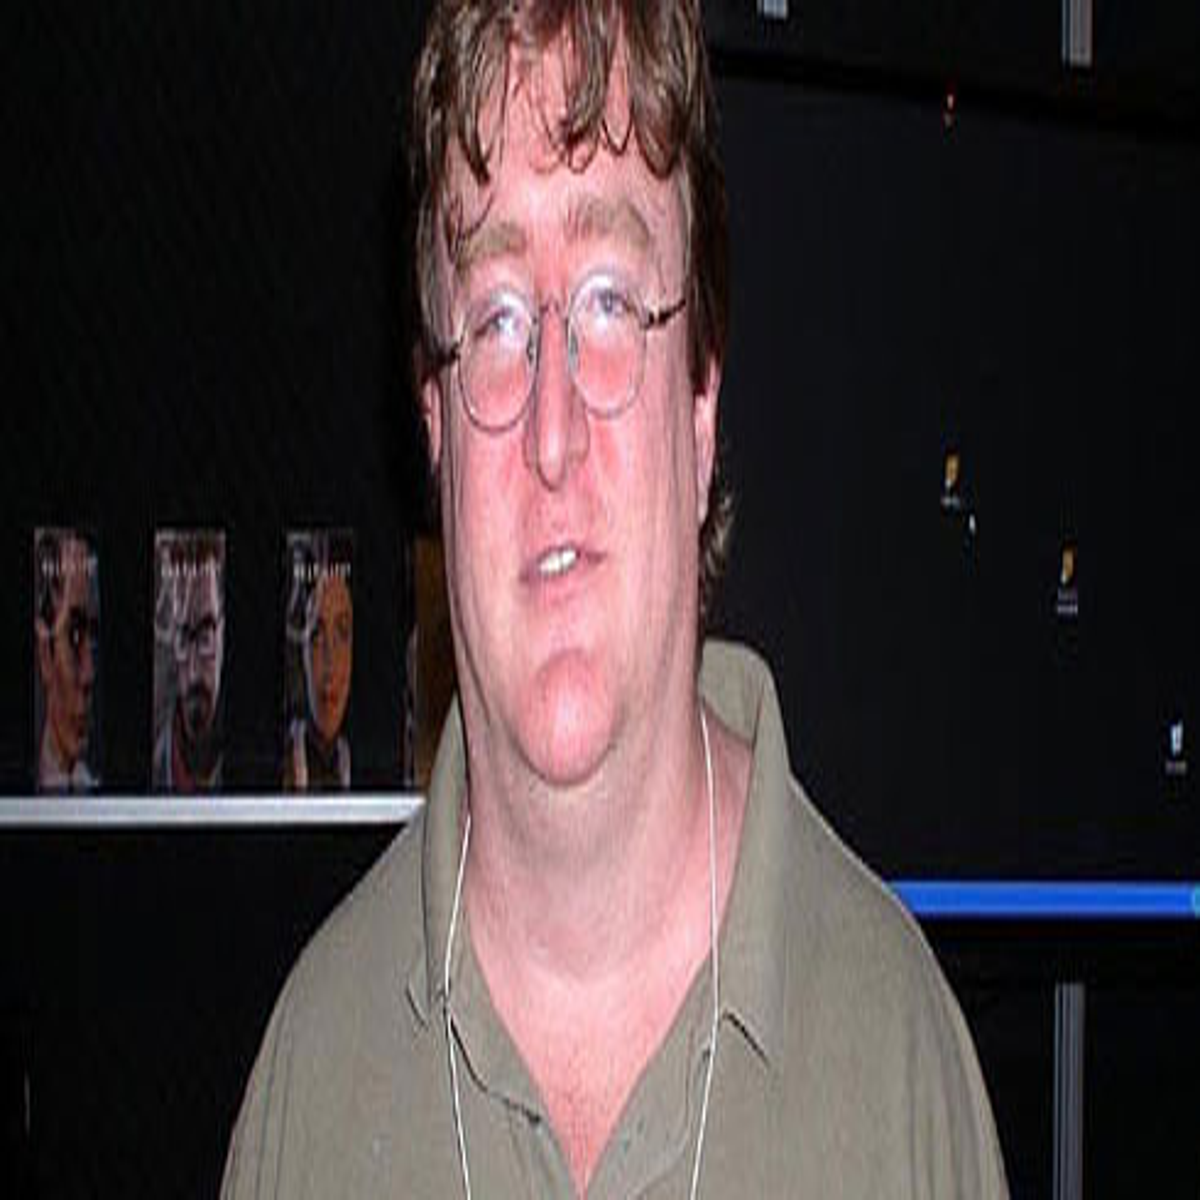 Gabe Newell fake account, Gabe Newell